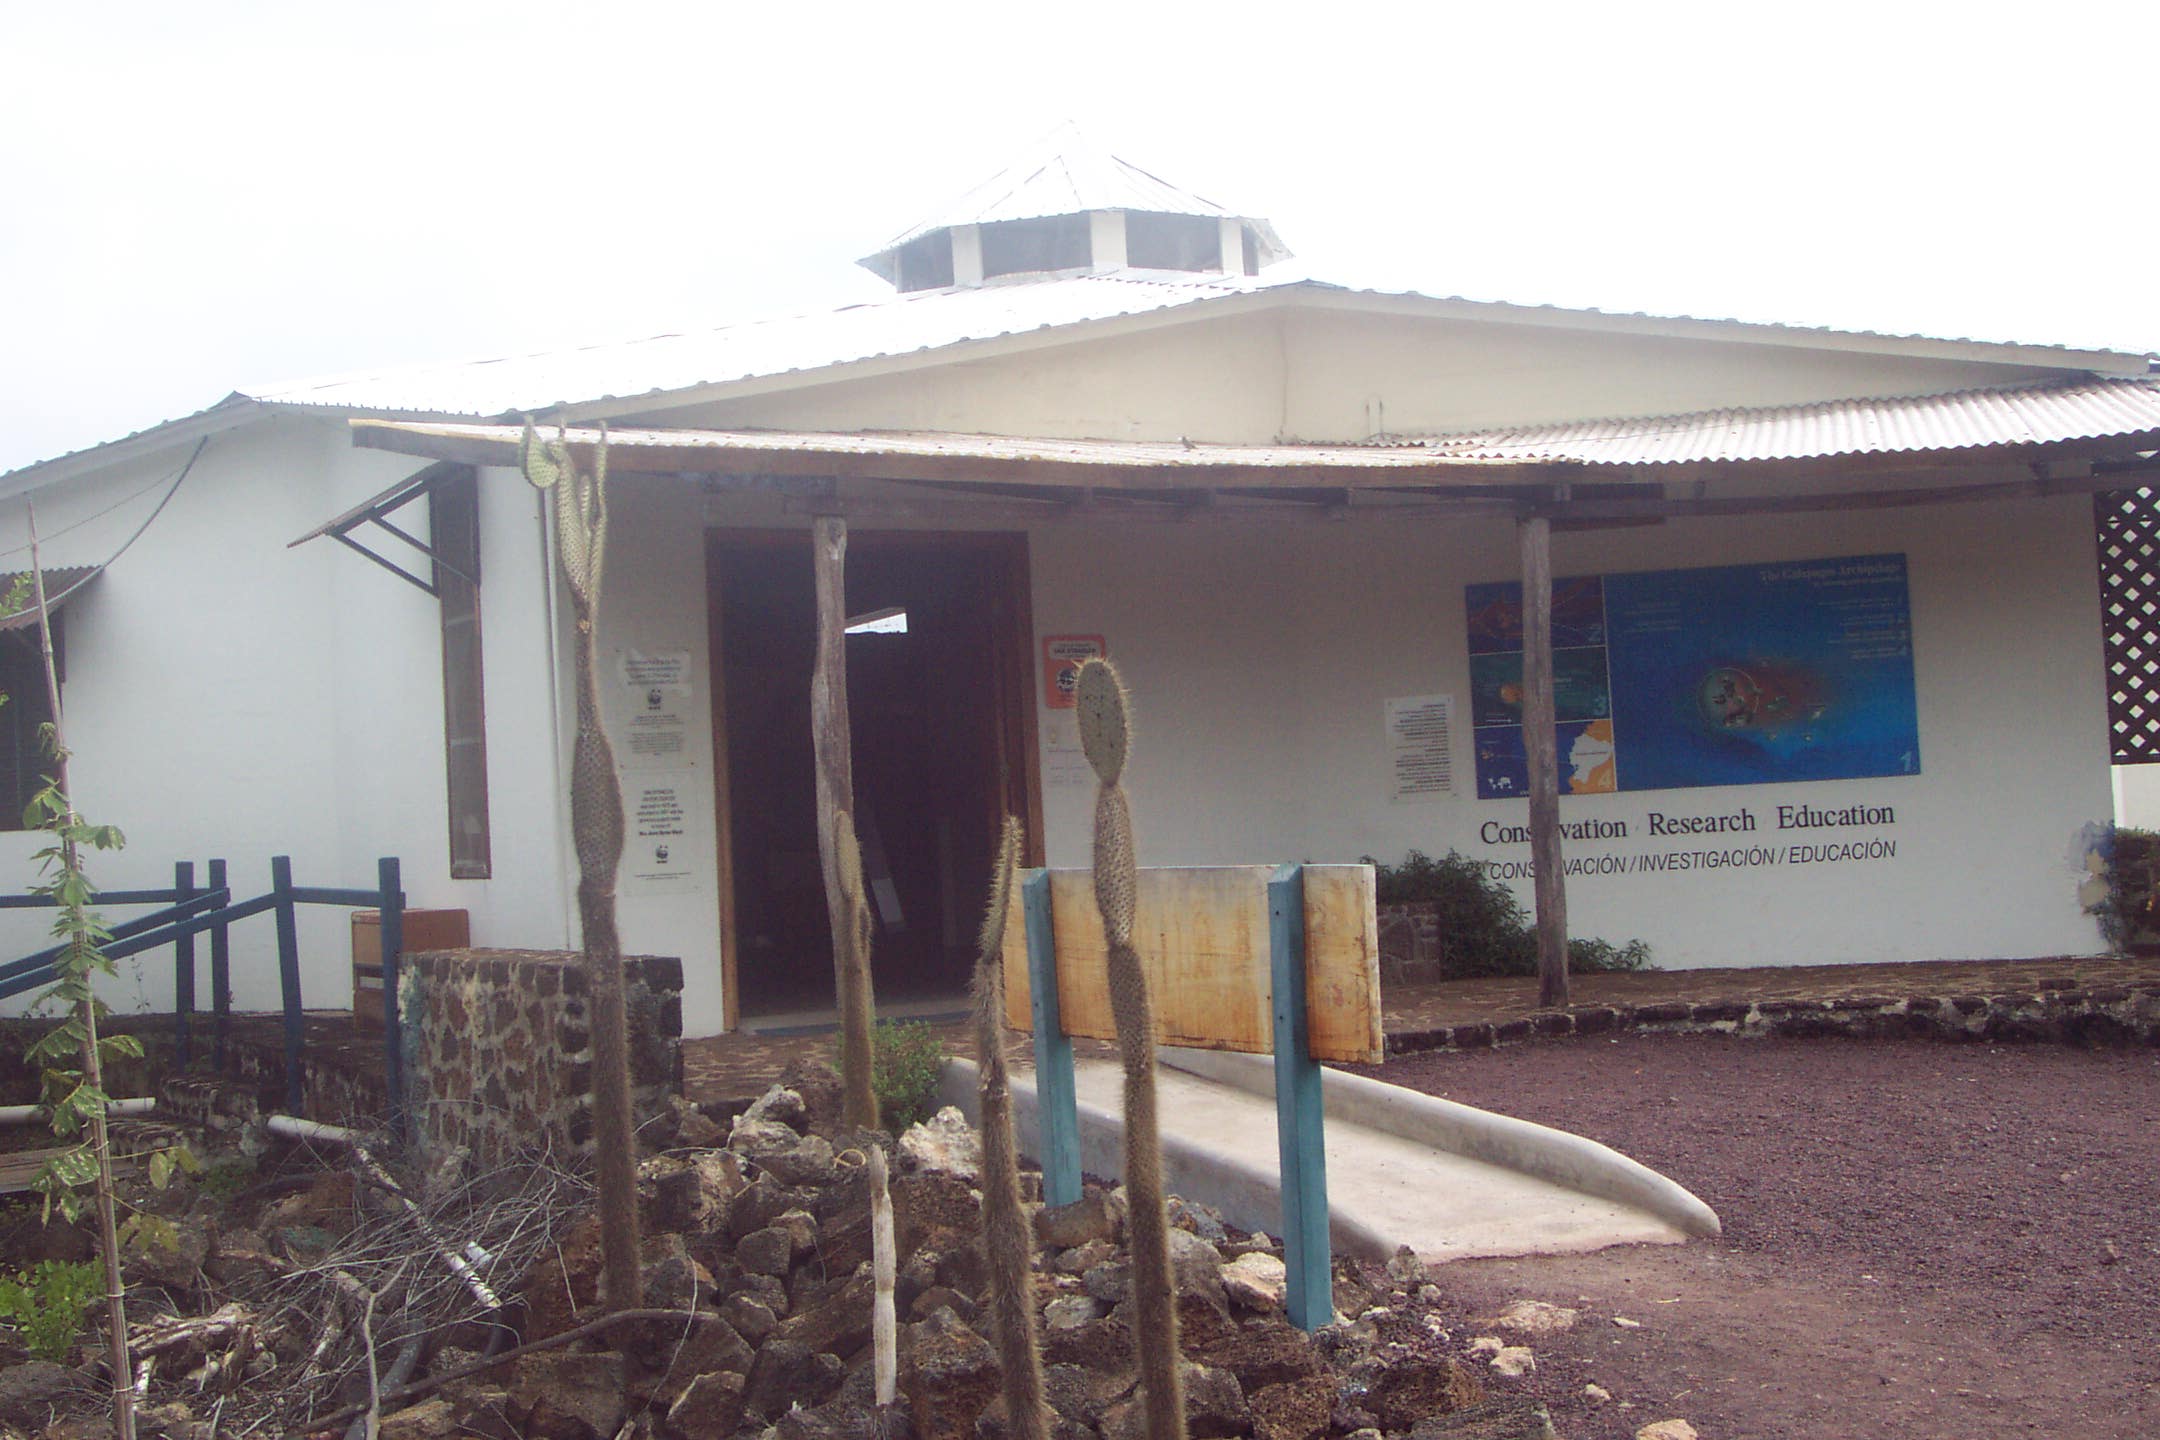 Darwin Conservation Center on Santa Cruz Island